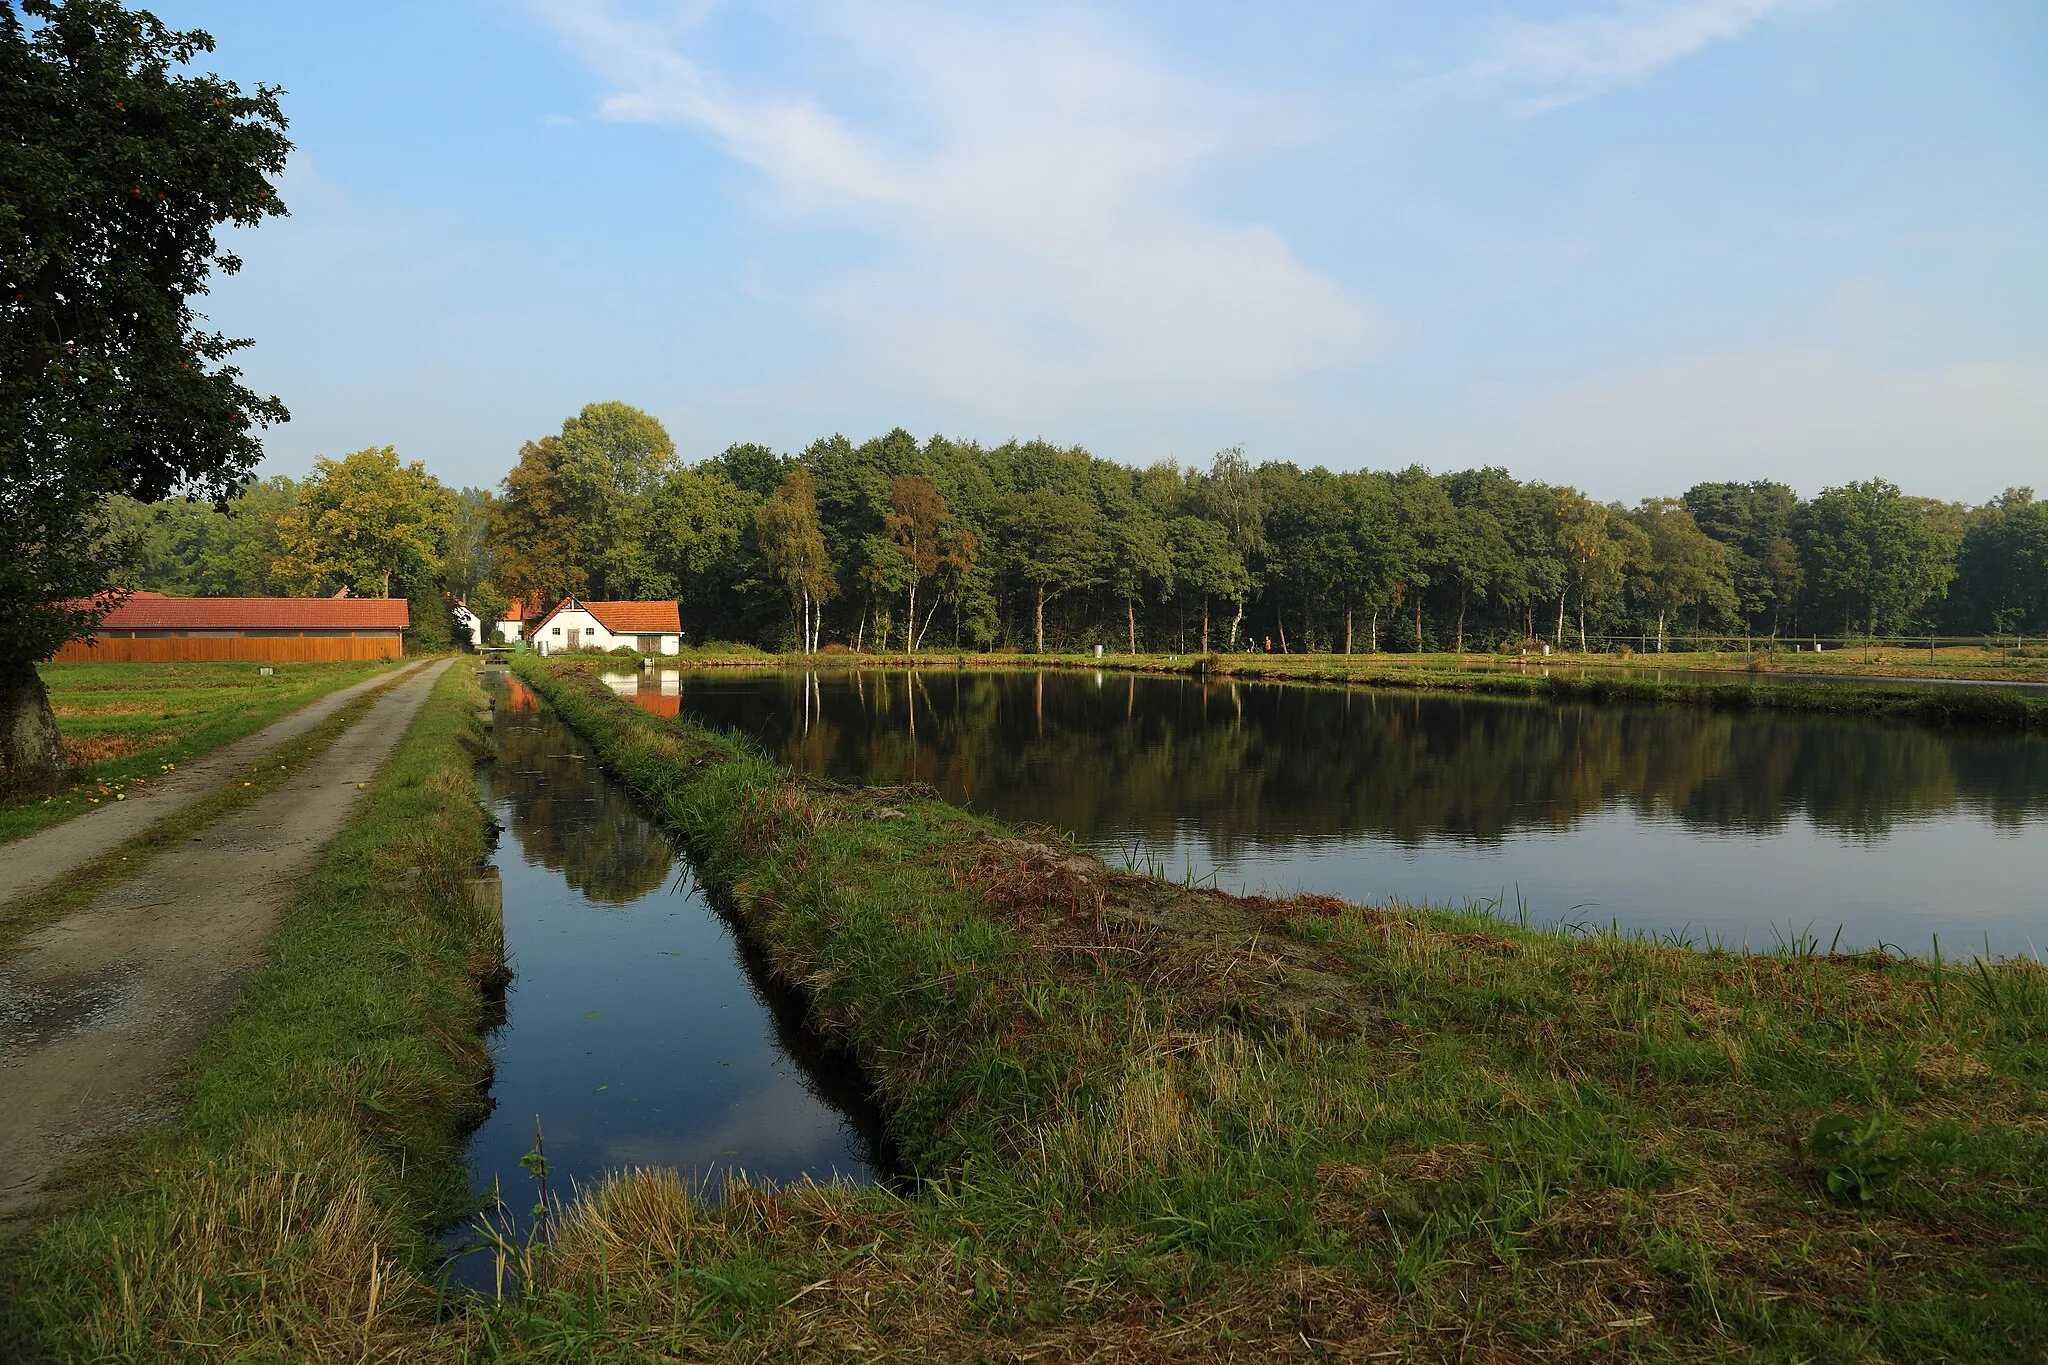 Photo showing: One of the Ahlhorn fish ponds (Ahlhorner Fischteiche) near Emstek, Landkreis Cloppenburg, Lower Saxony, Germany.